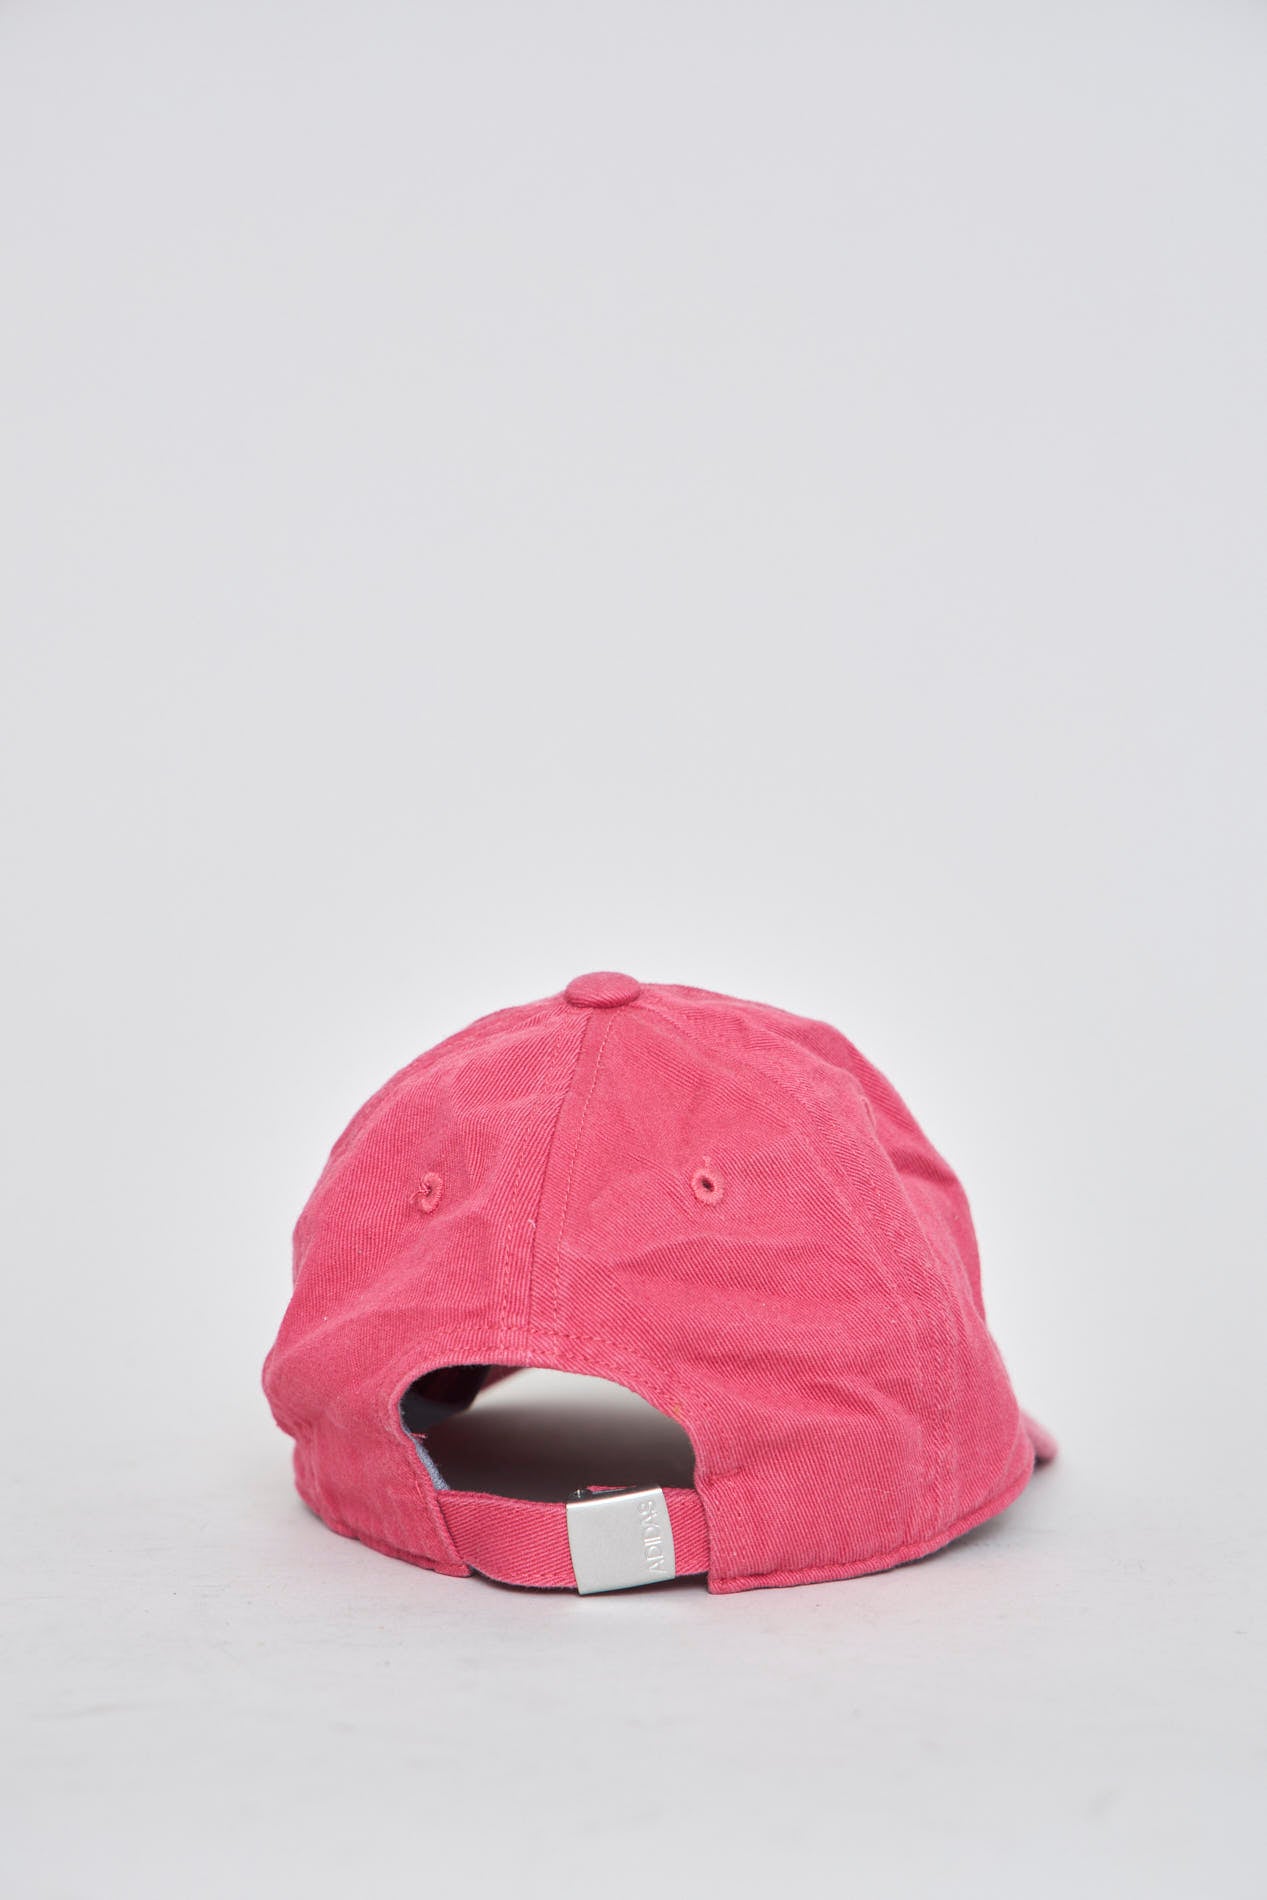 Gorro casual  rosado  adidas talla M 623